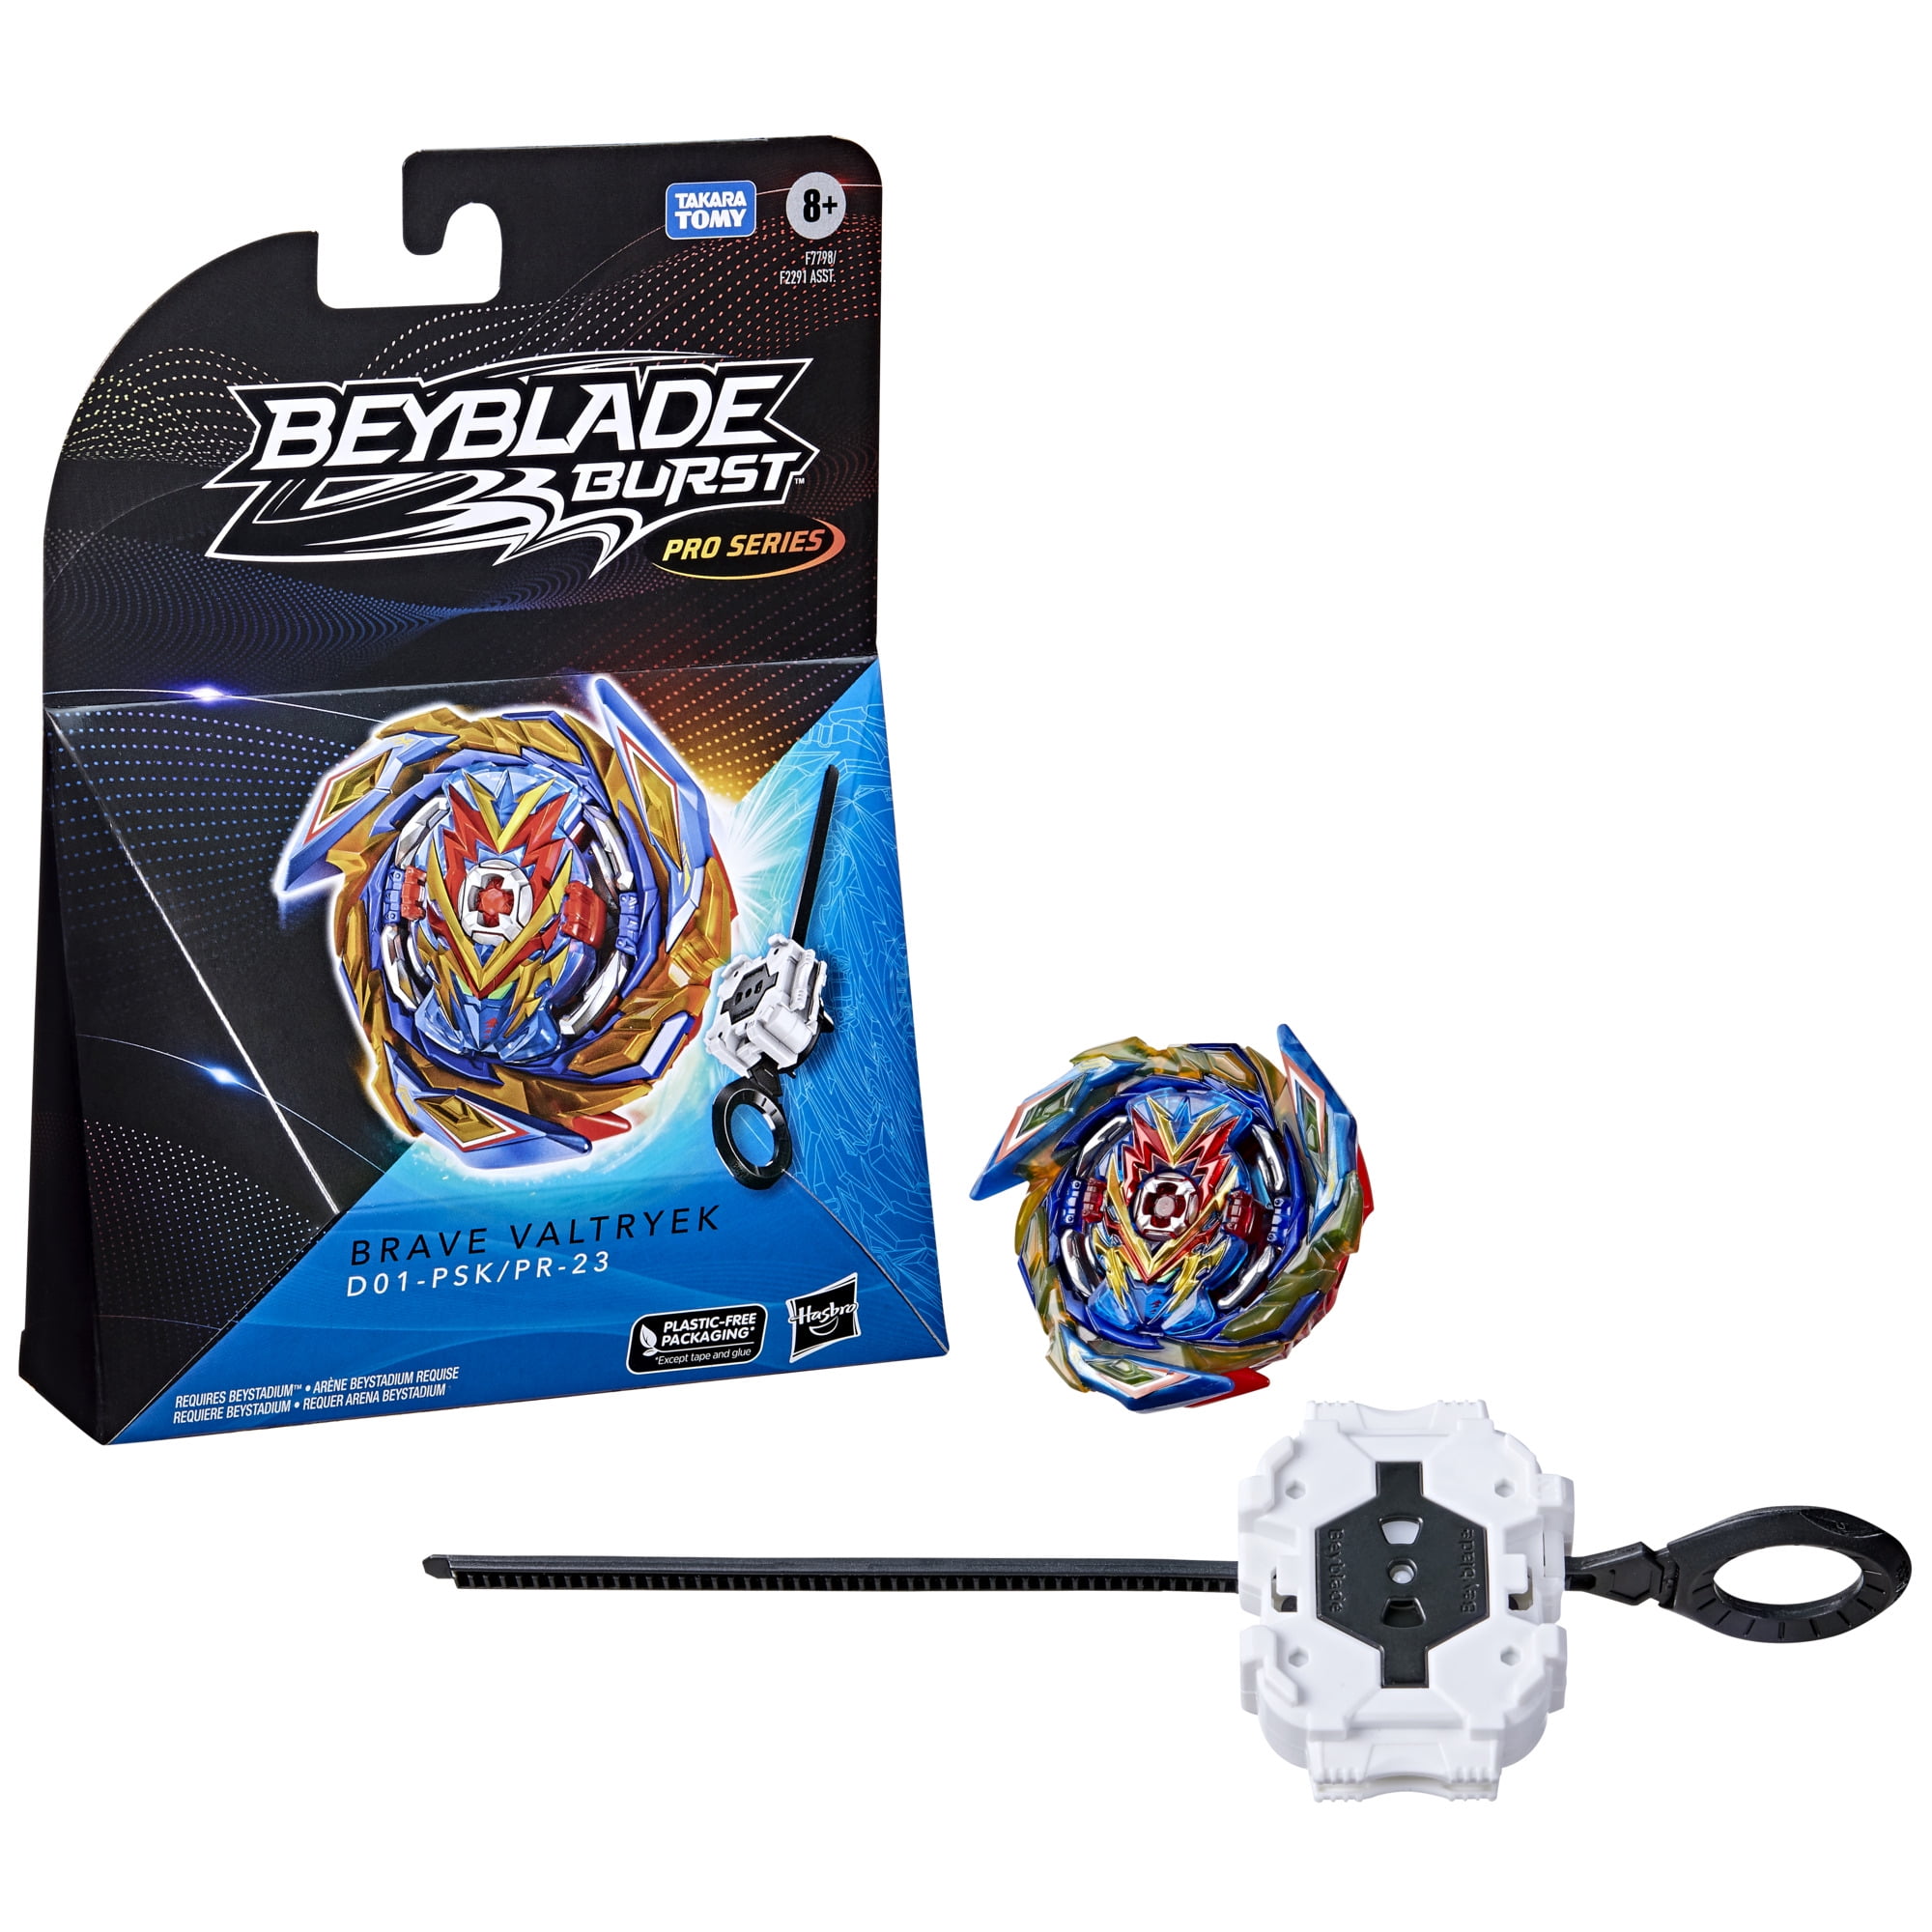 Beyblade Burst Pro Series Brave Valtryek Spinning Top Starter Pack,  Battling Game Top with Launcher 